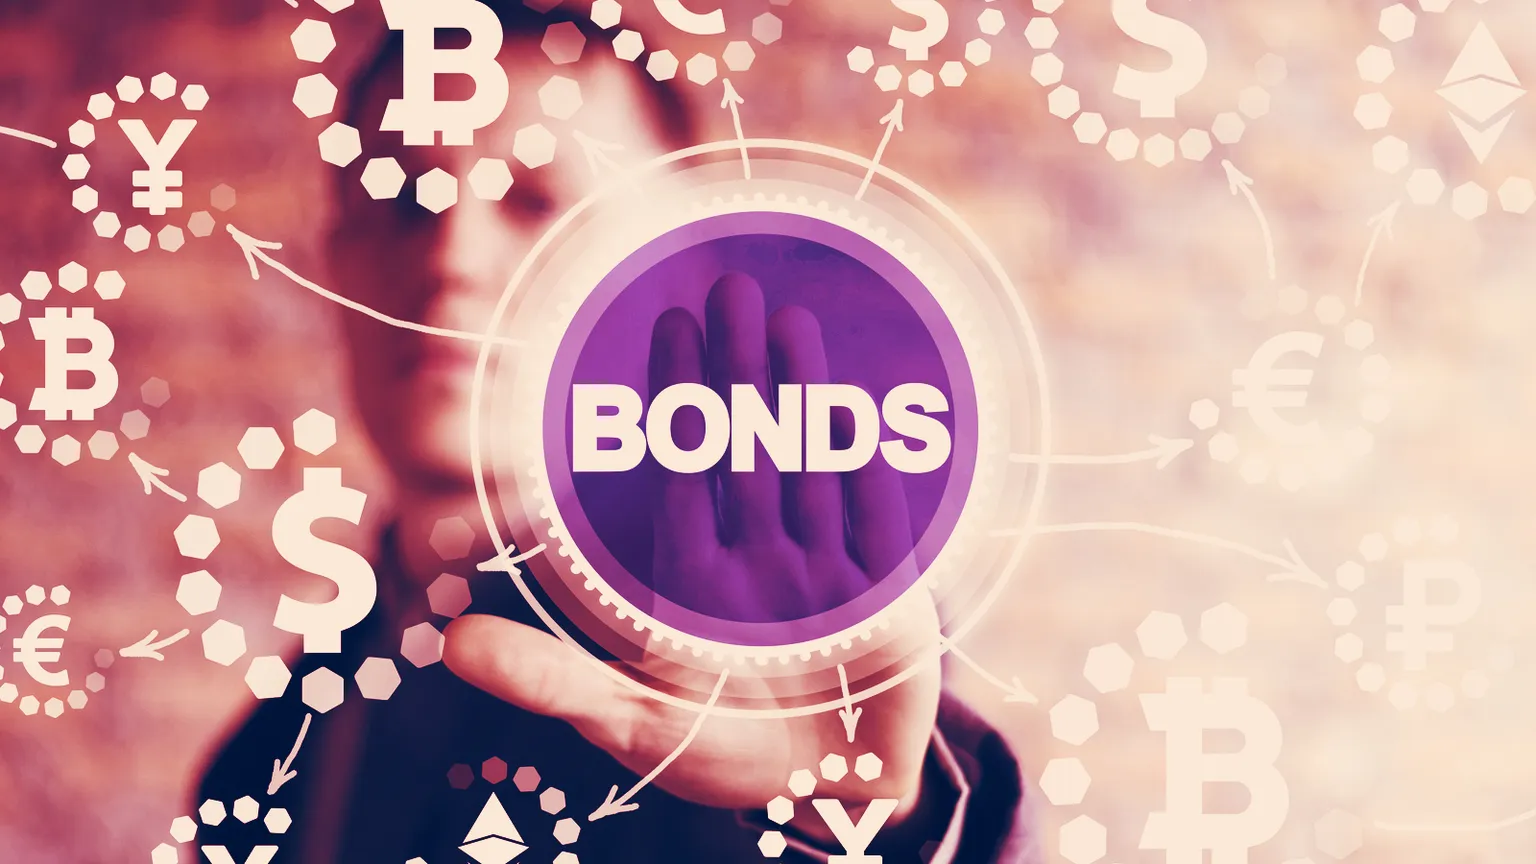 Digital bonds. Image: Shutterstock